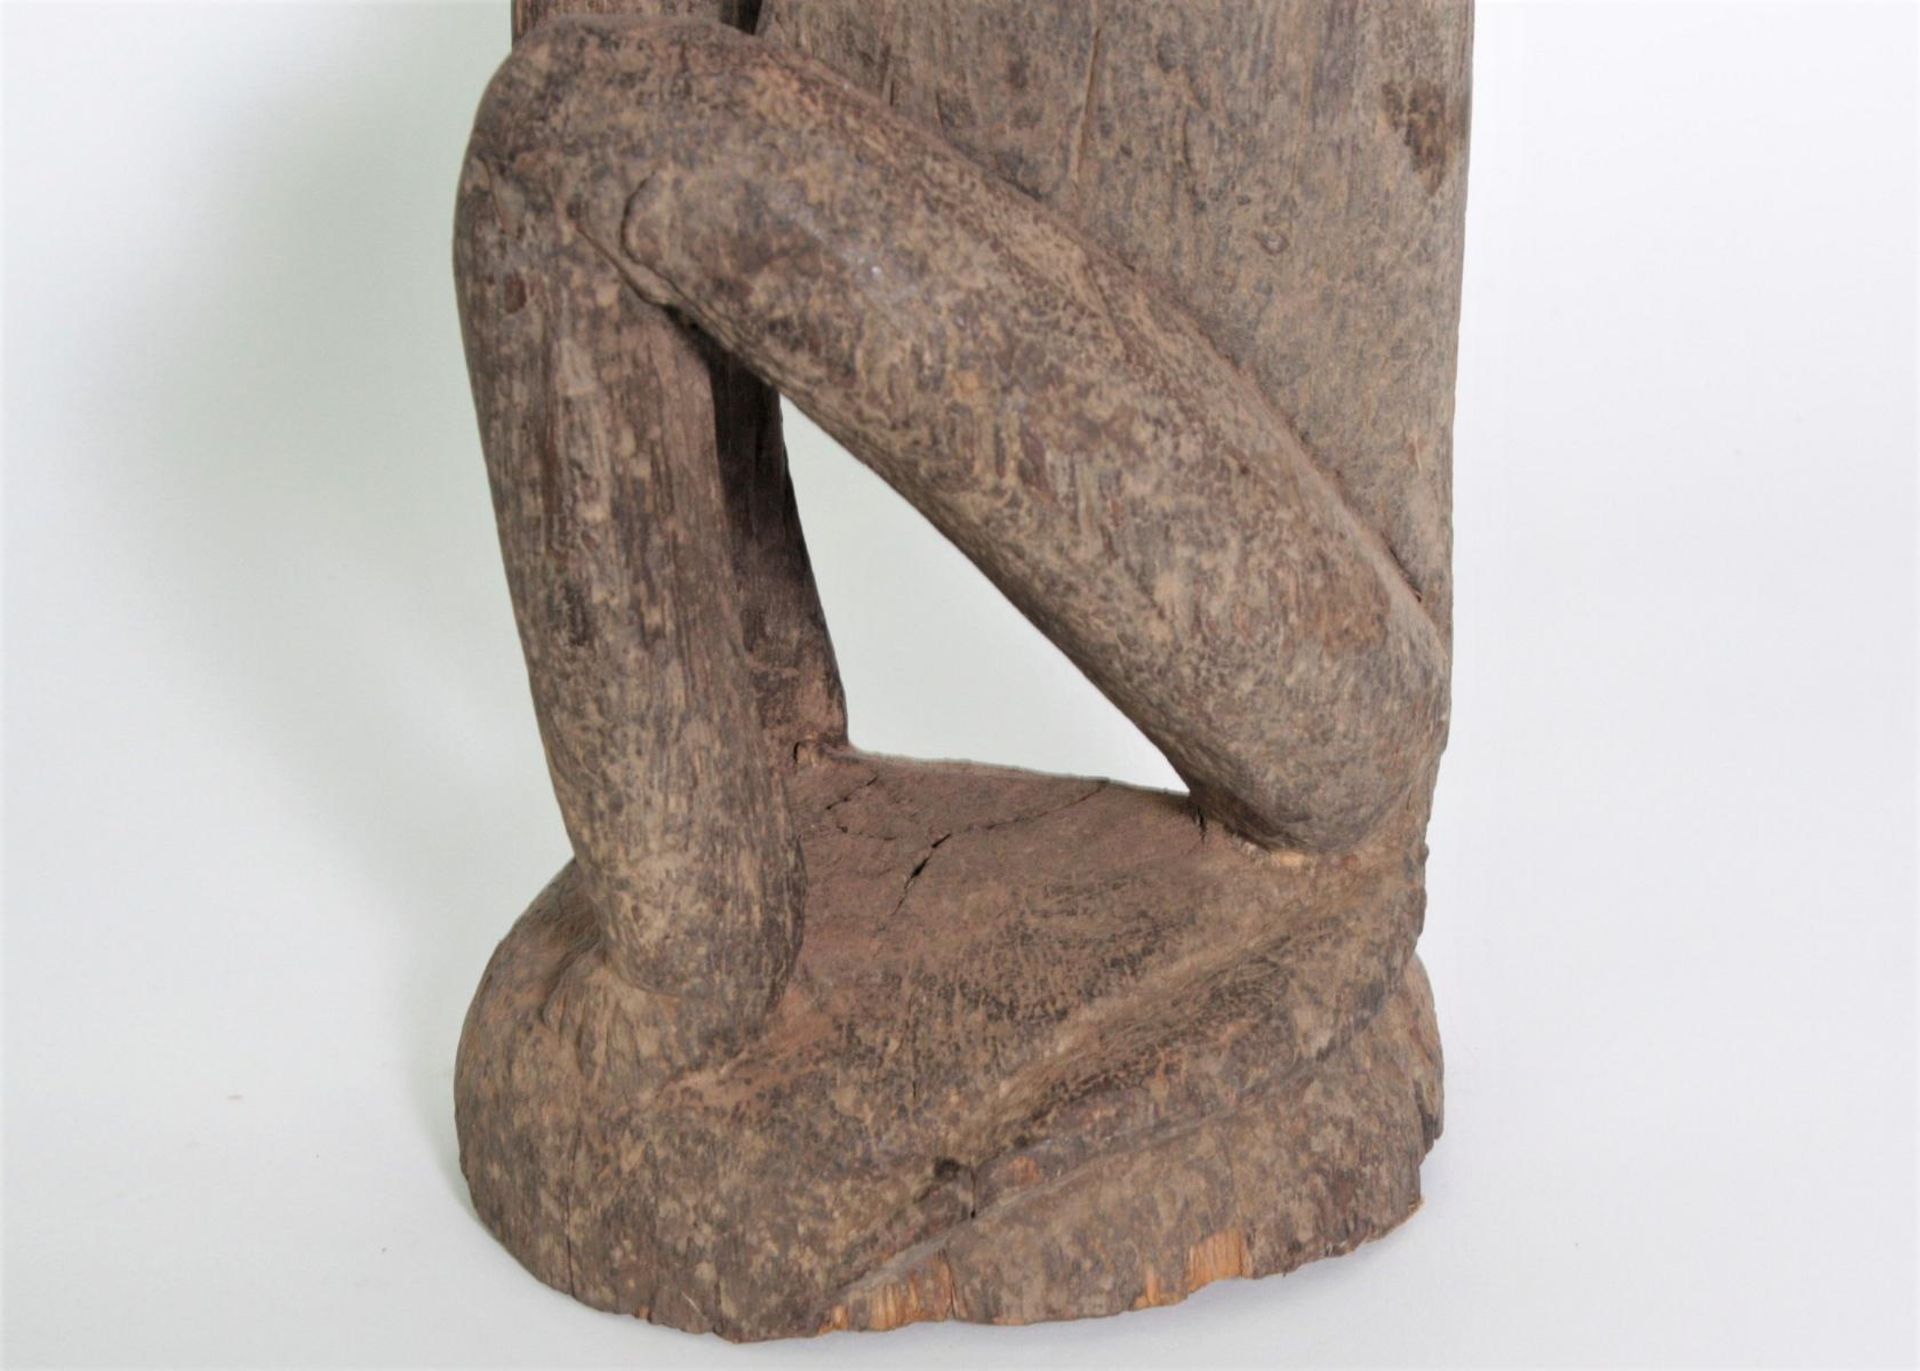 Hockende zoomorphe Figur, wohl Lobi, Burkina Faso, 1. Hälfte 20. Jh. - Image 10 of 10